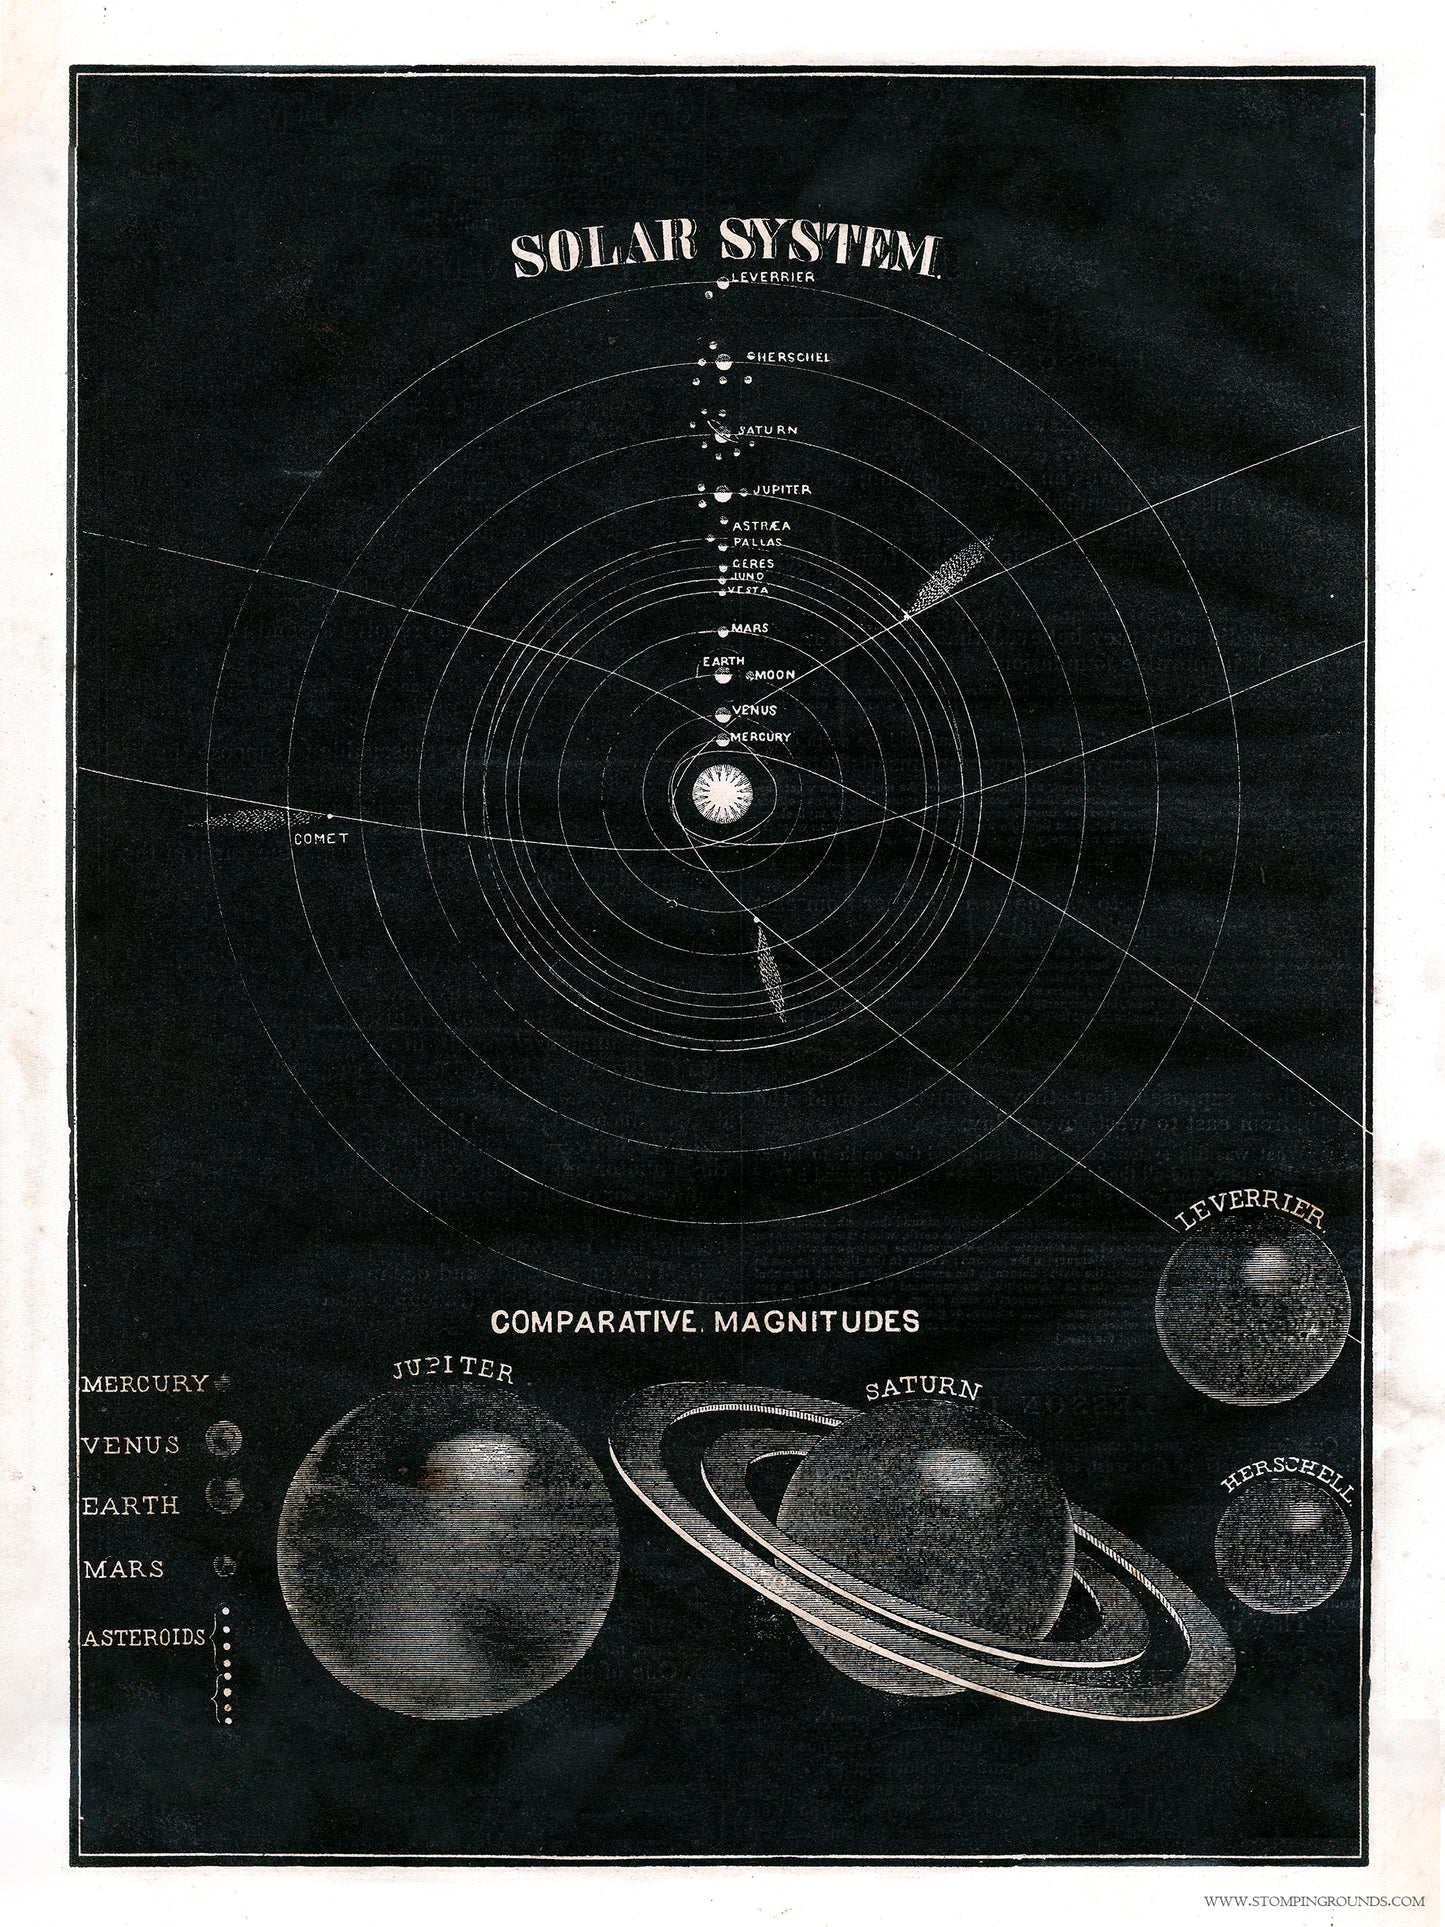 Solar System - Comparative Magnitudes